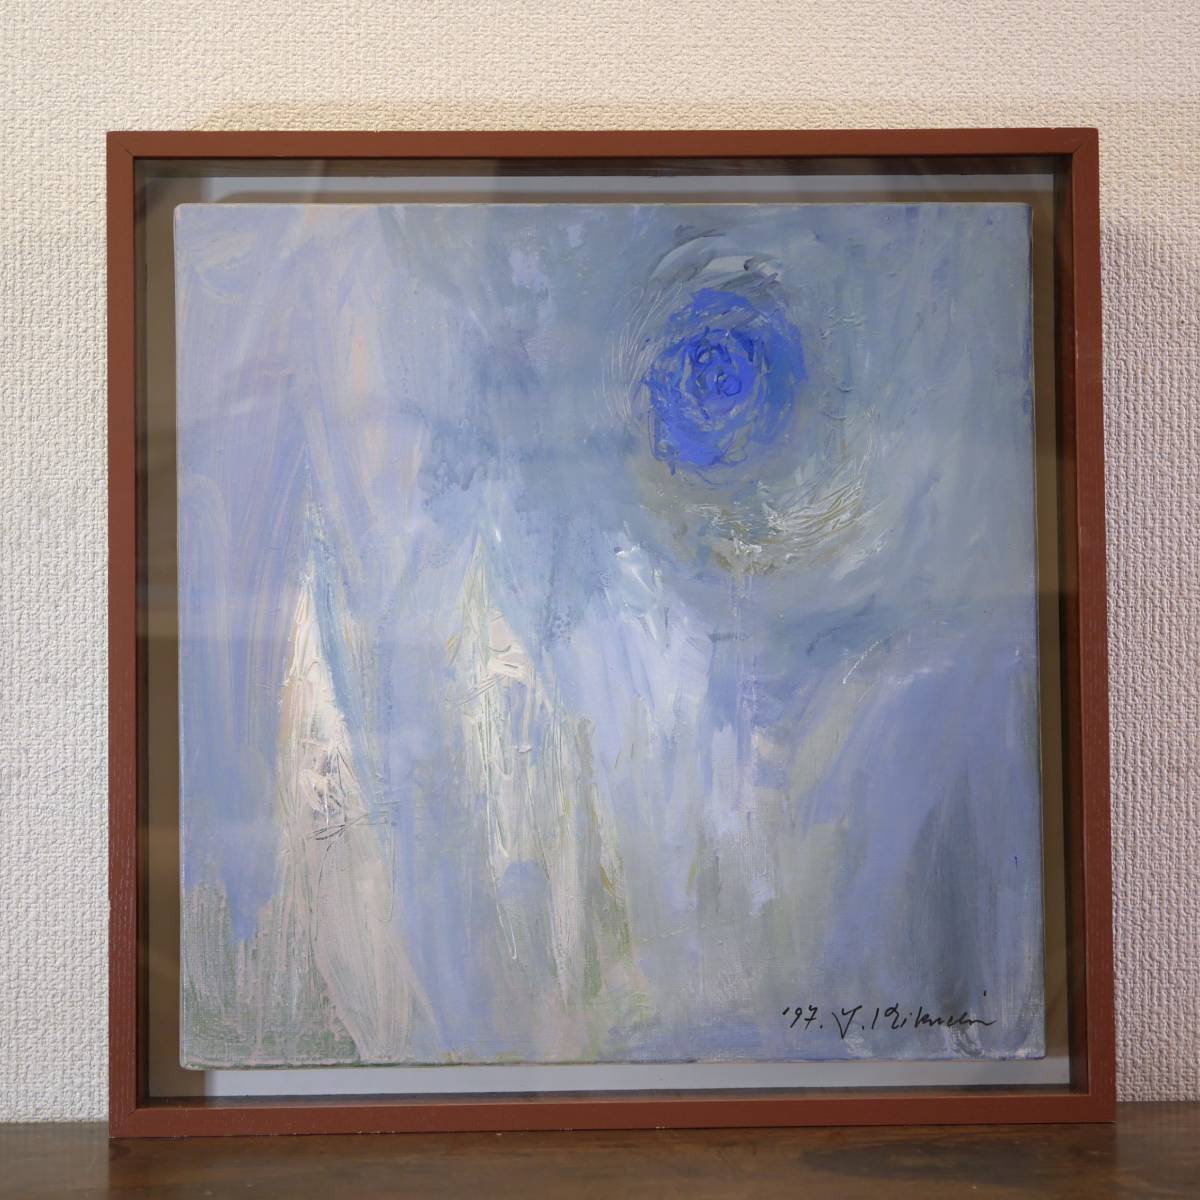 Authenticity guaranteed ◆ Yutaka Kikuchi Good Night 1997 Framed 52×52 Oil painting Painting 26-01, painting, oil painting, abstract painting